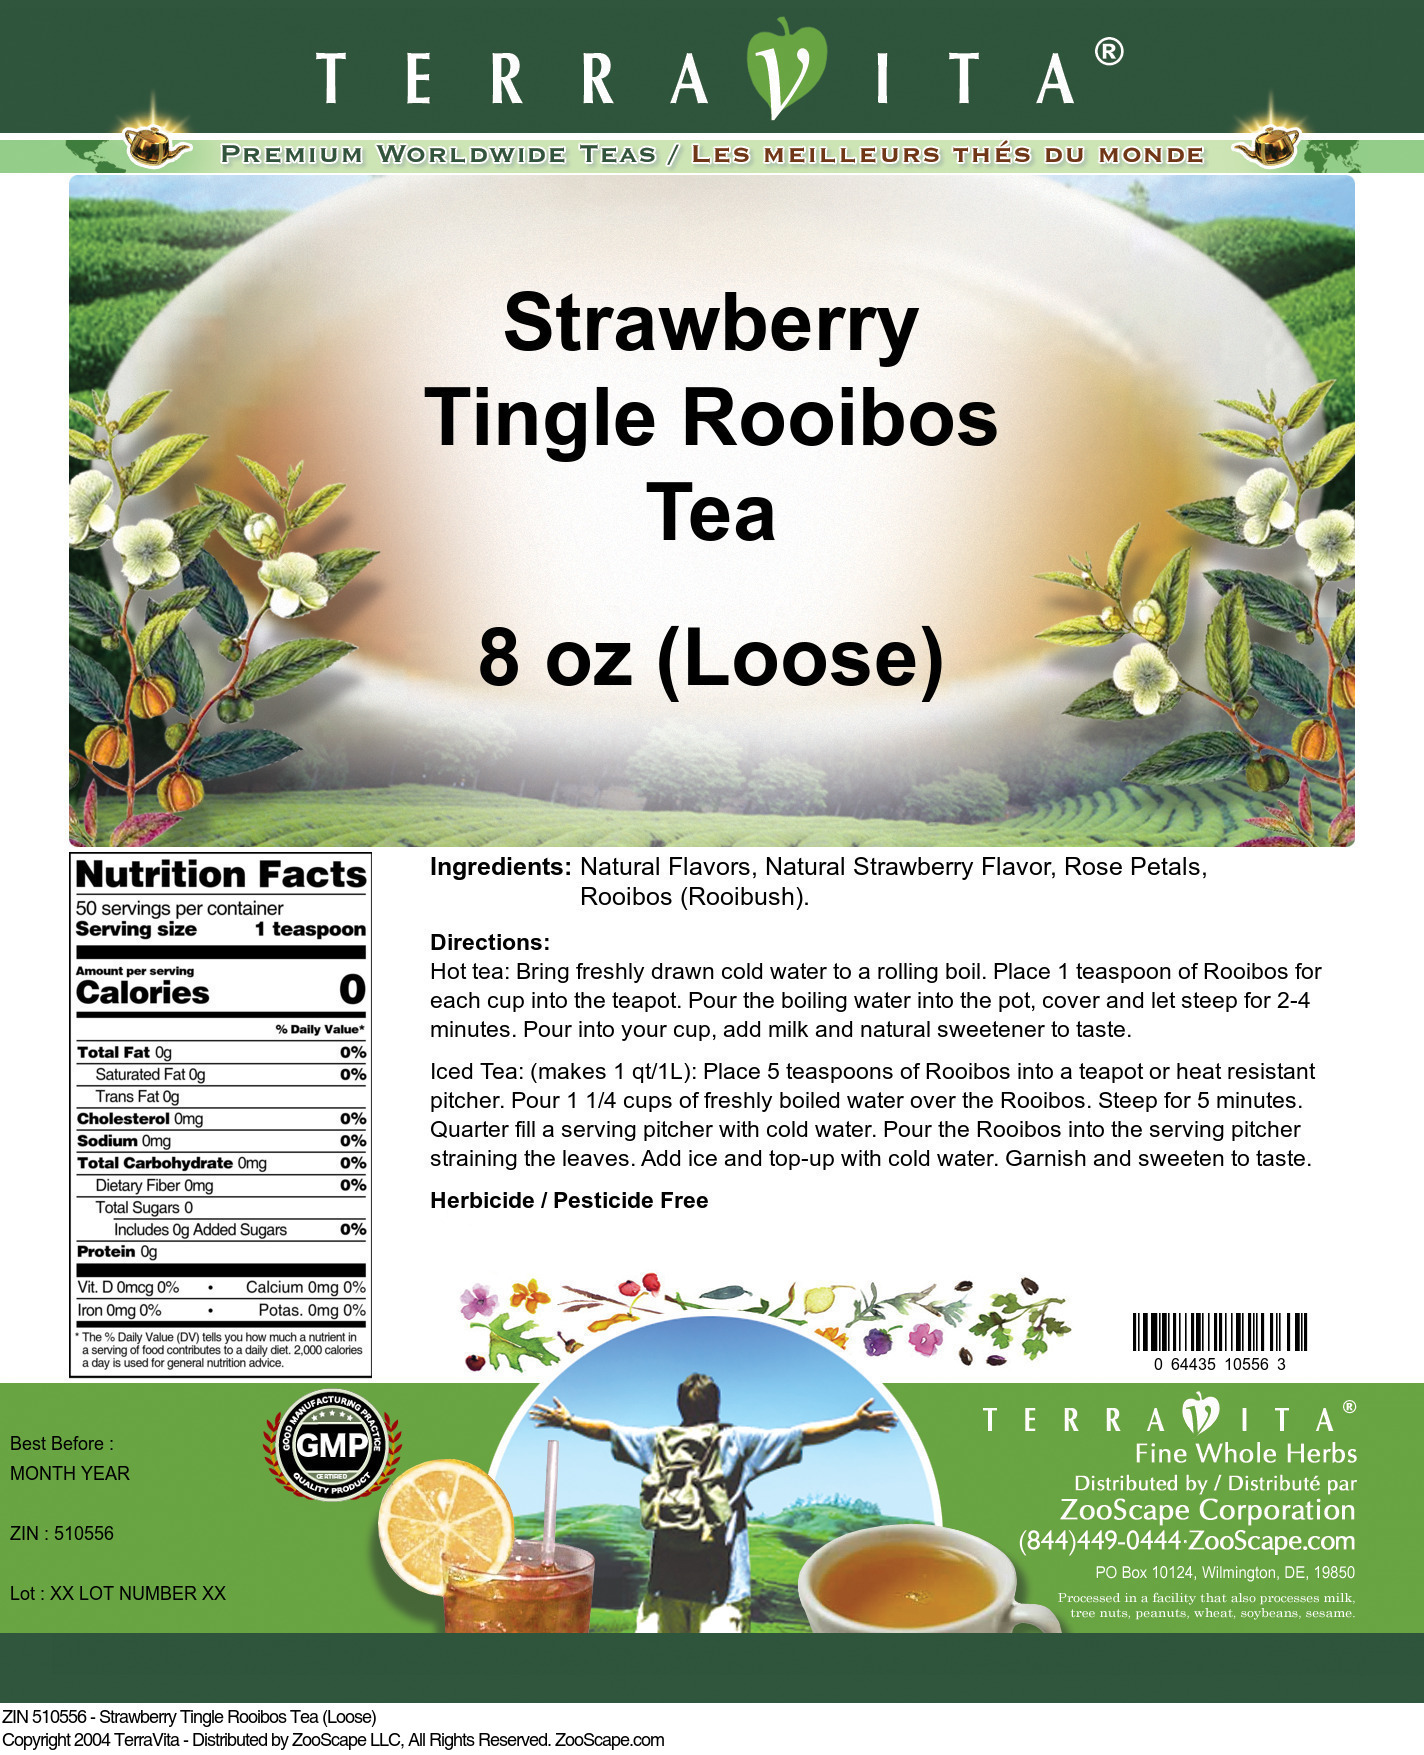 Strawberry Tingle Rooibos Tea (Loose) - Label